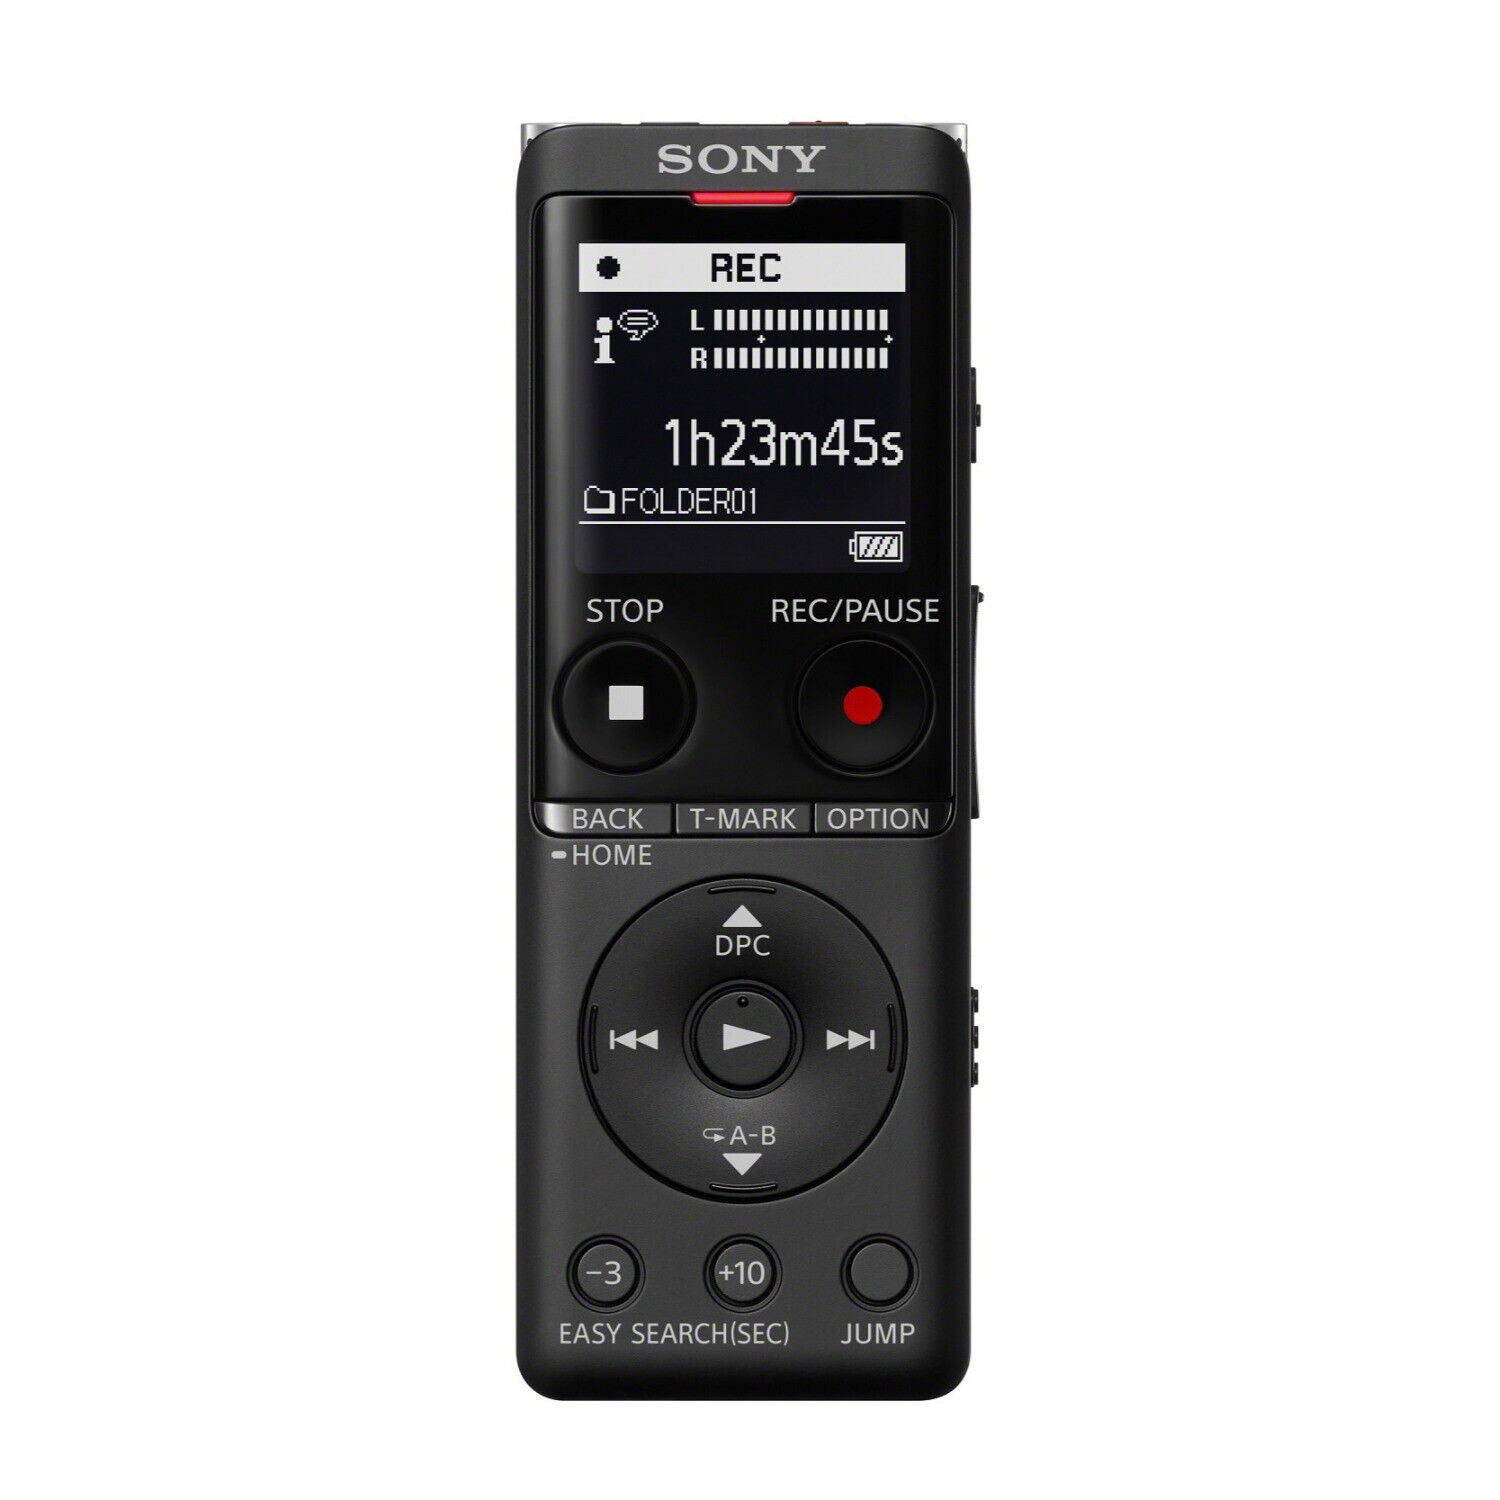 Sony ICD-UX570 Series UX570 Digital Voice Recorder Black